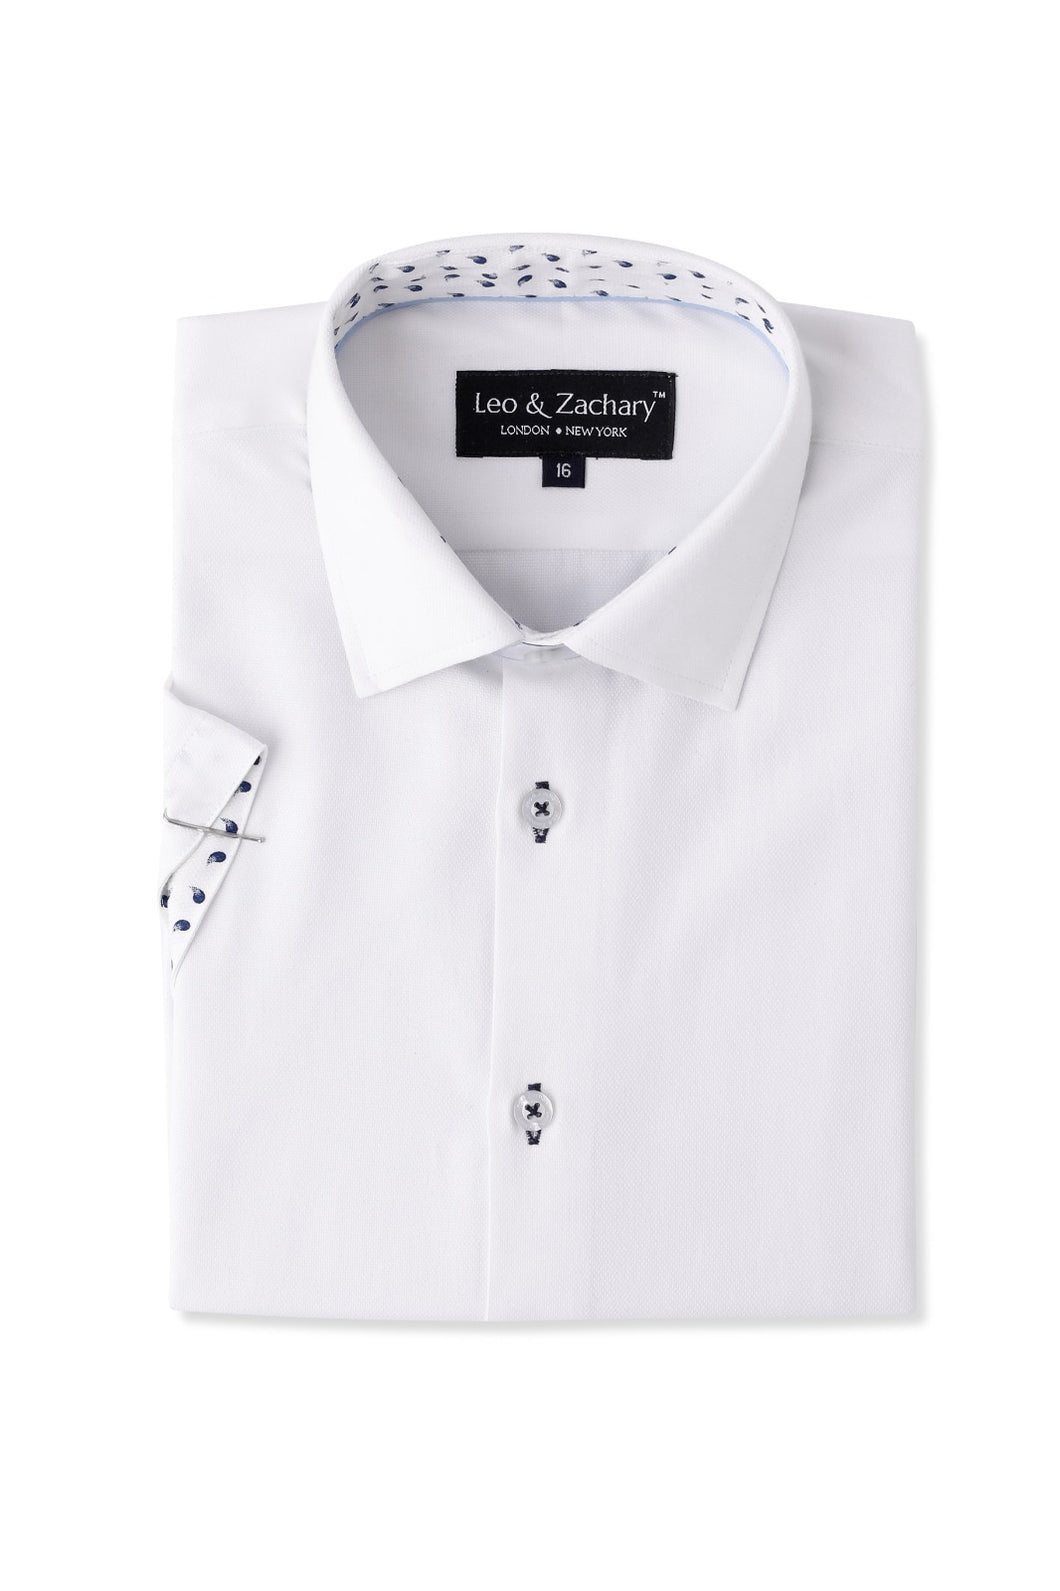 Short sleeve dress shirt 5875 white with navy